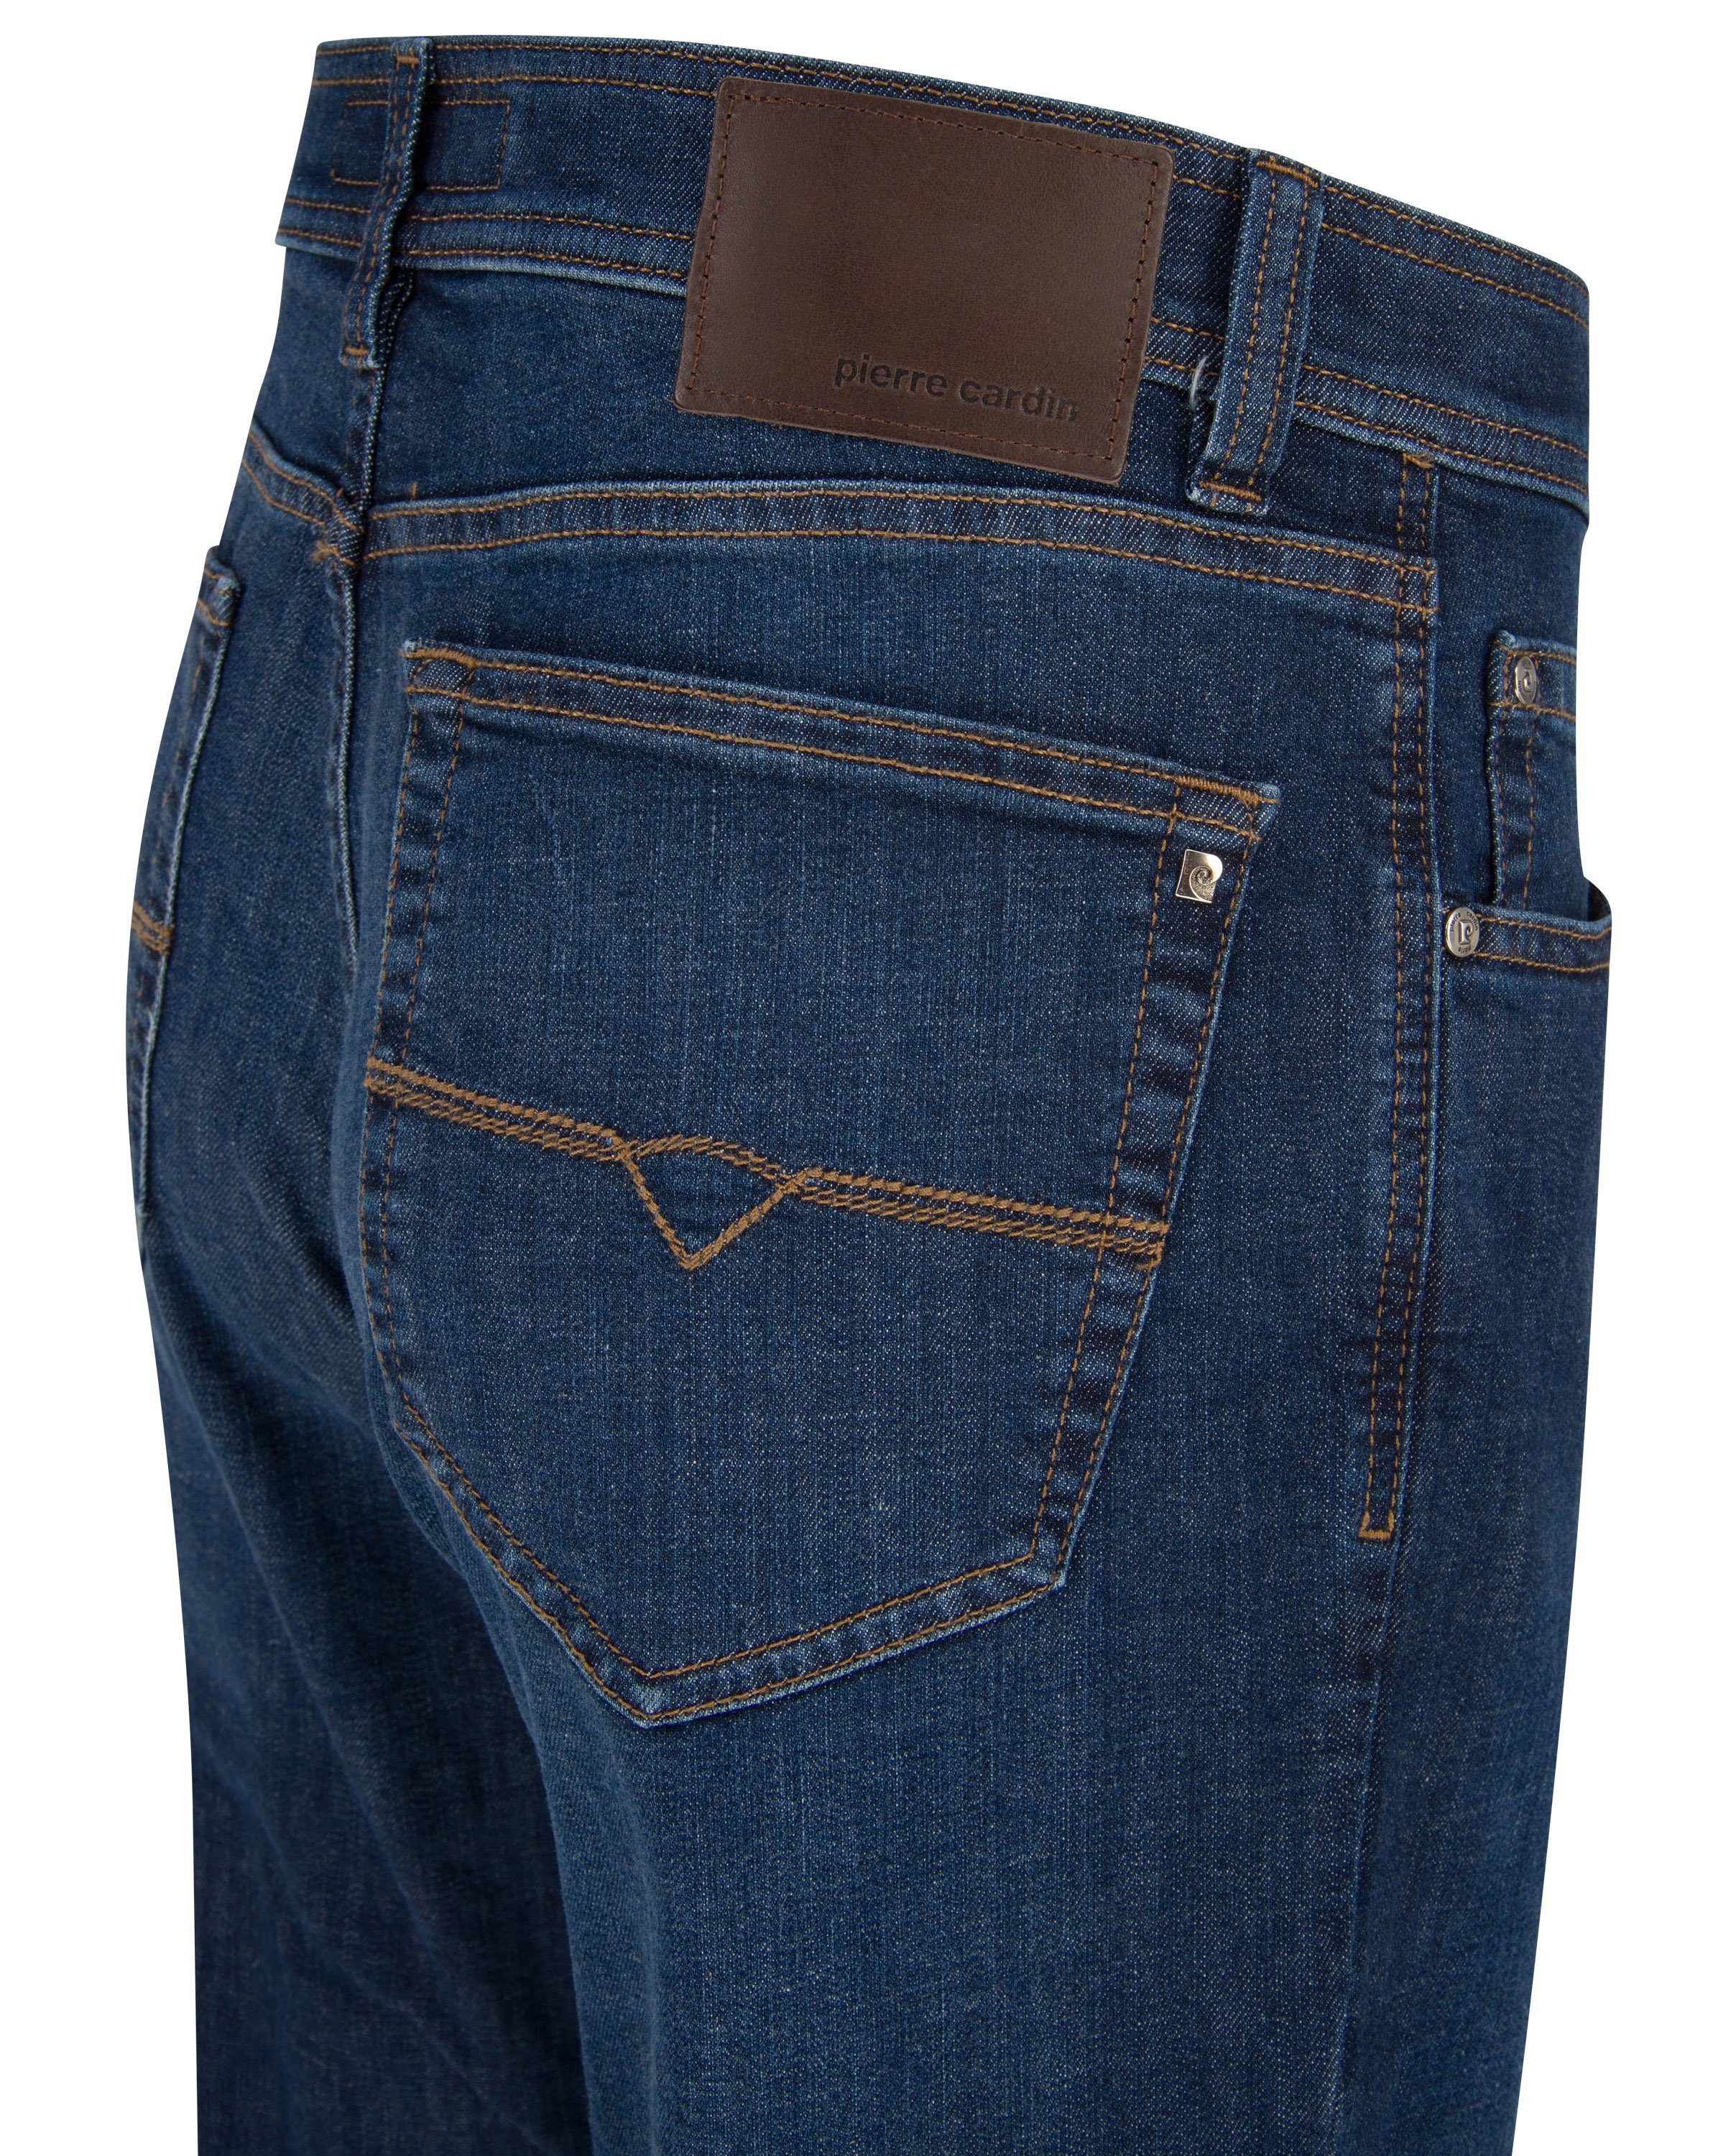 DEAUVILLE THERMO 3496 Cardin - 7010.03 5-Pocket-Jeans indigo PIERRE used deep CARDIN sea Pierre